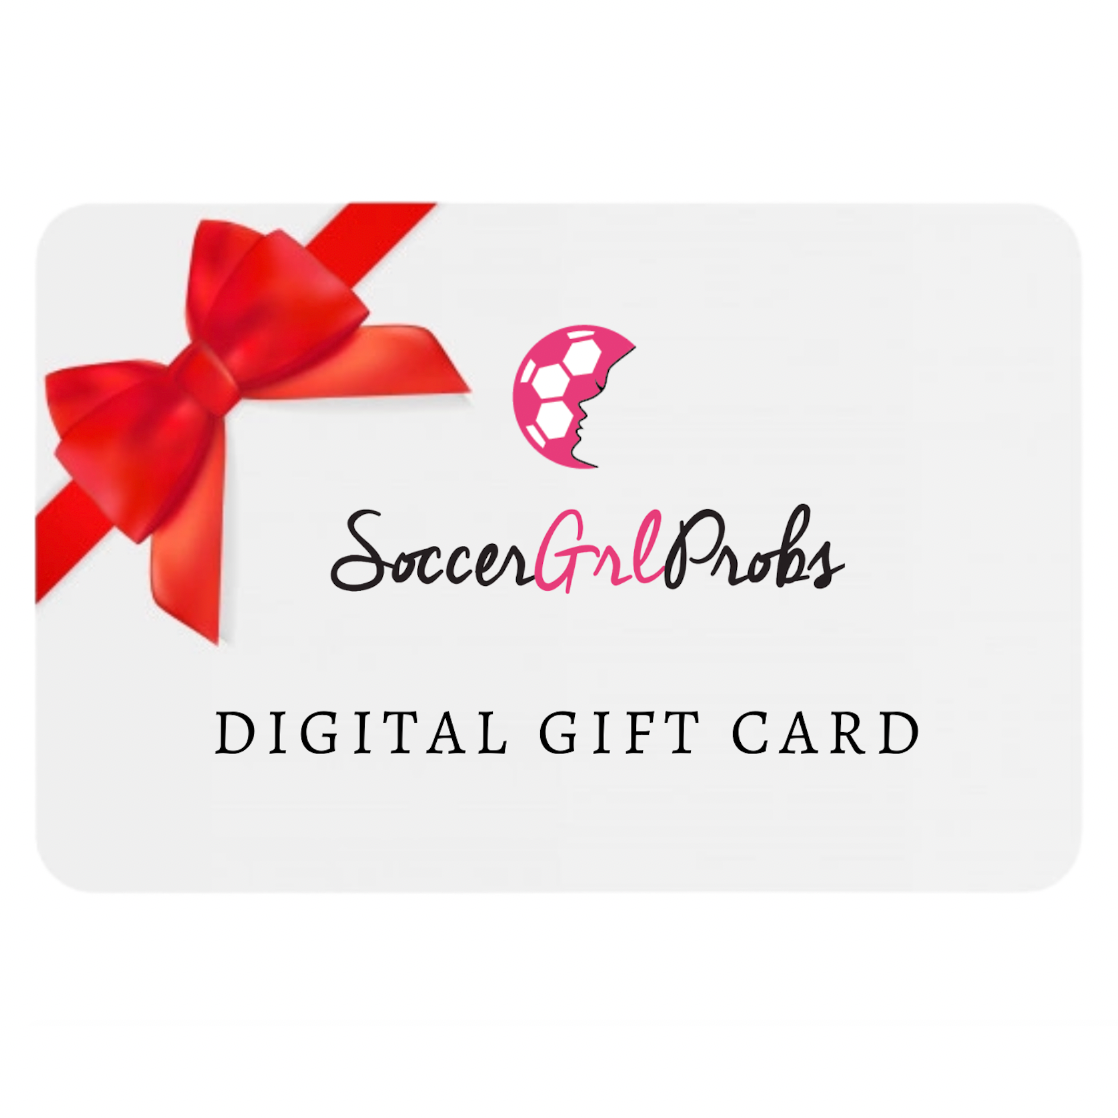 FAQ - Choose the perfect e-gift card